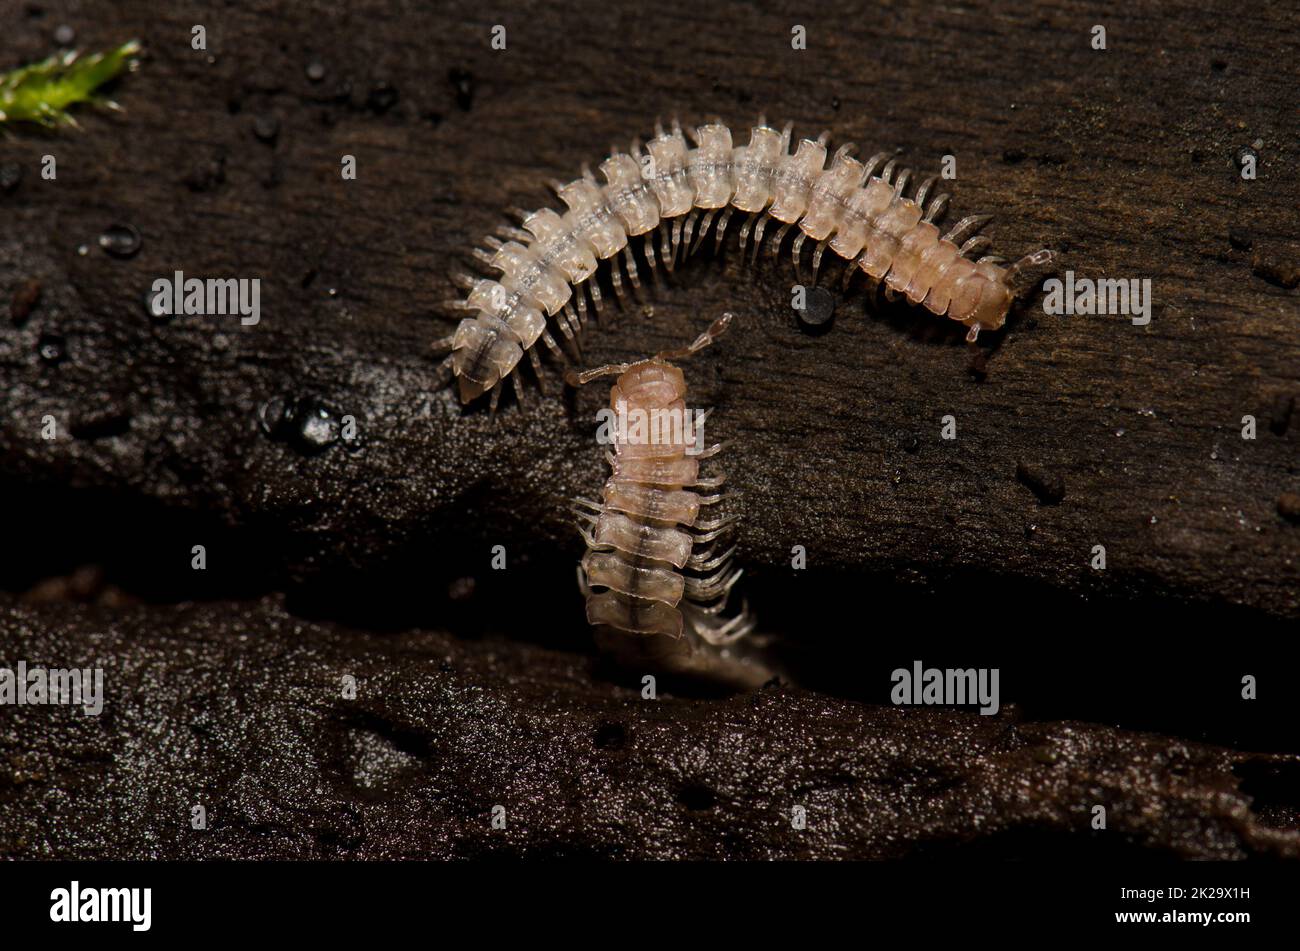 Flat-backed millipedes on a fallen trunk. Stock Photo